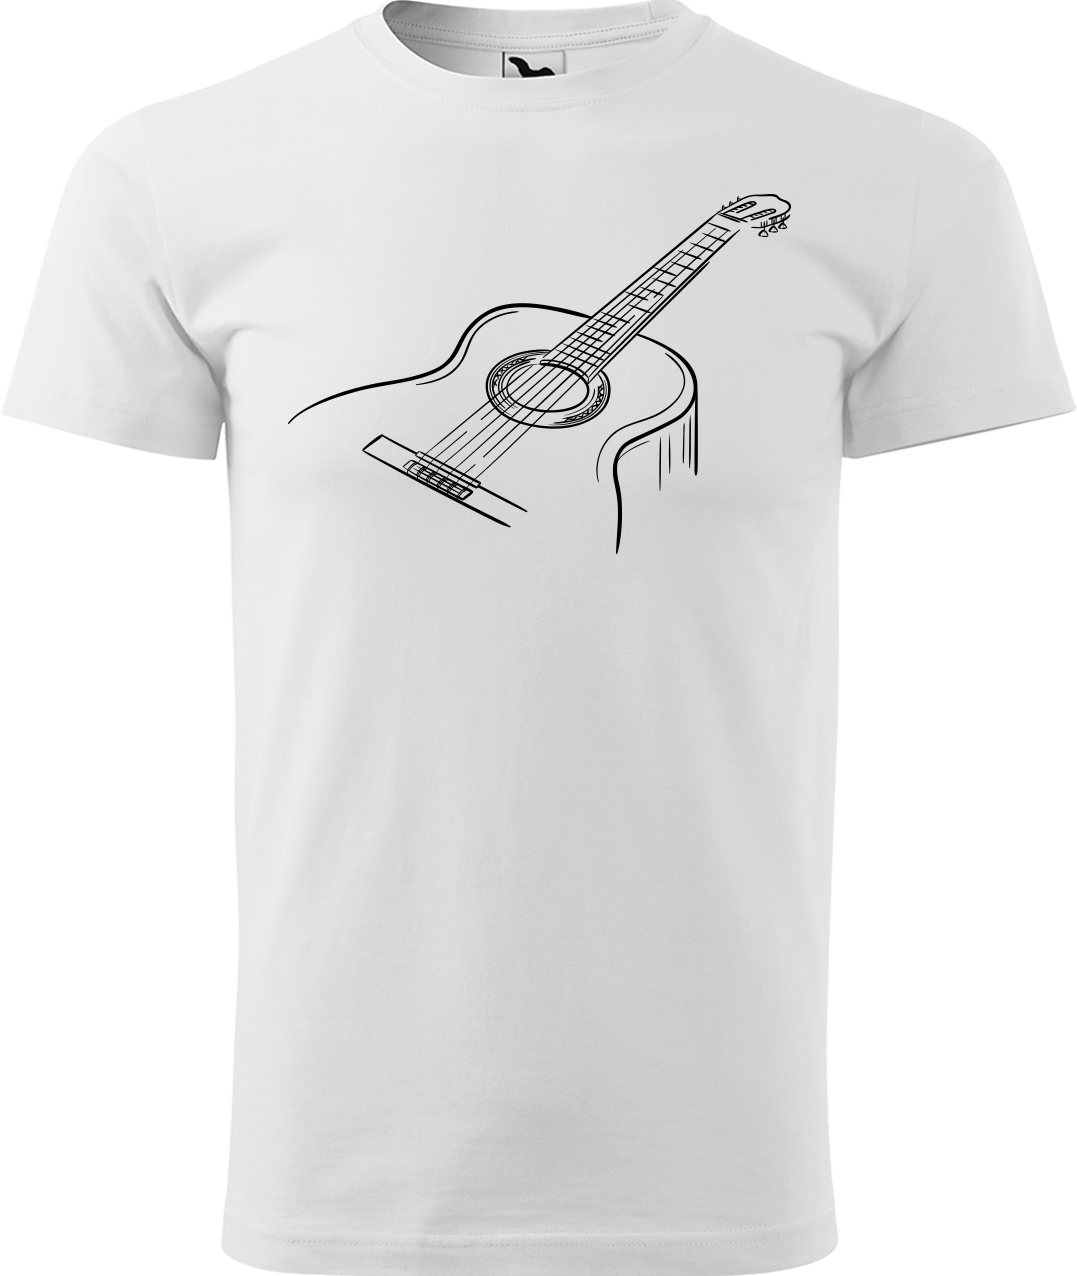 Pánské tričko s kytarou - Klasická kytara Velikost: 3XL, Barva: Bílá (00)